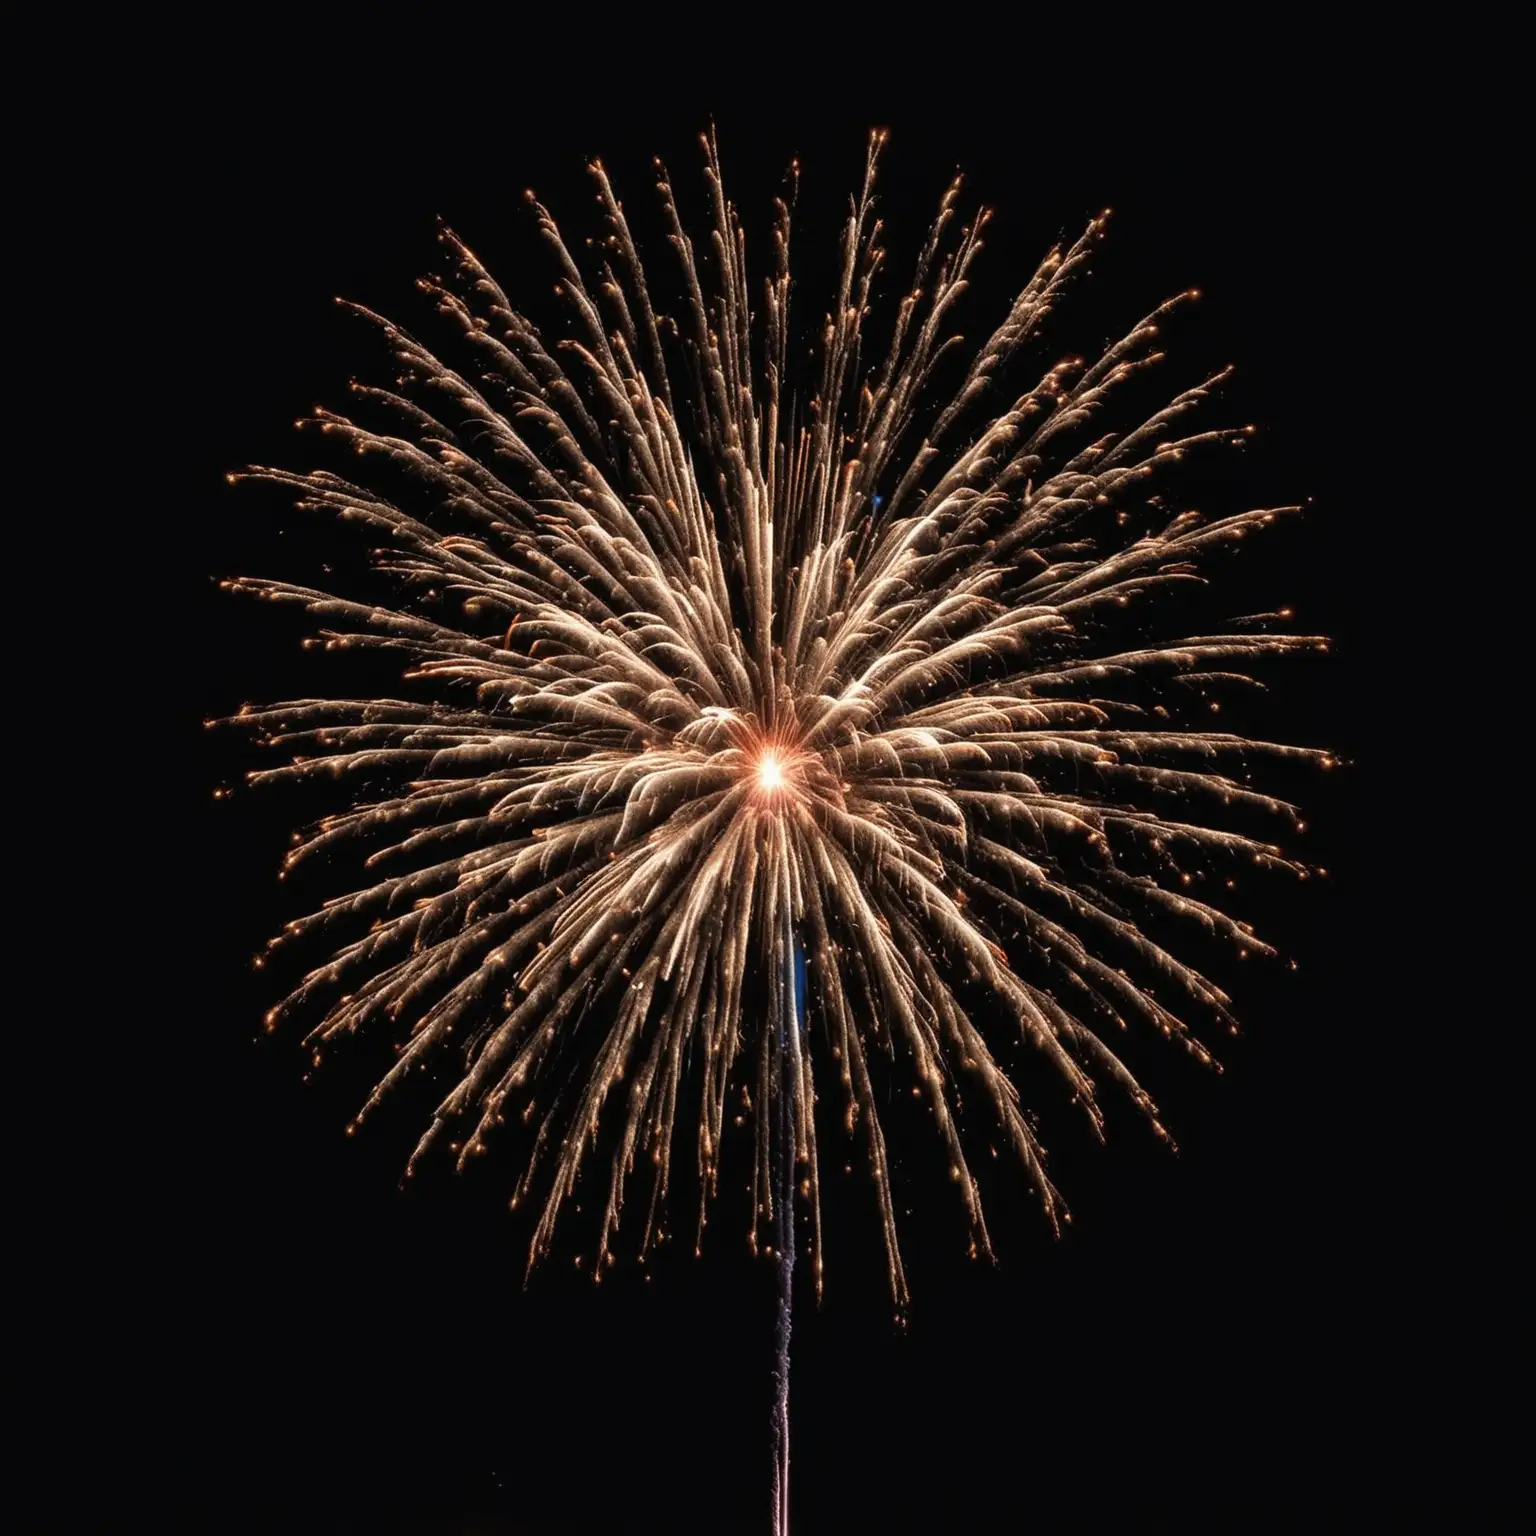 Vibrant Fireworks Illuminating the Night Sky on a PitchBlack Canvas